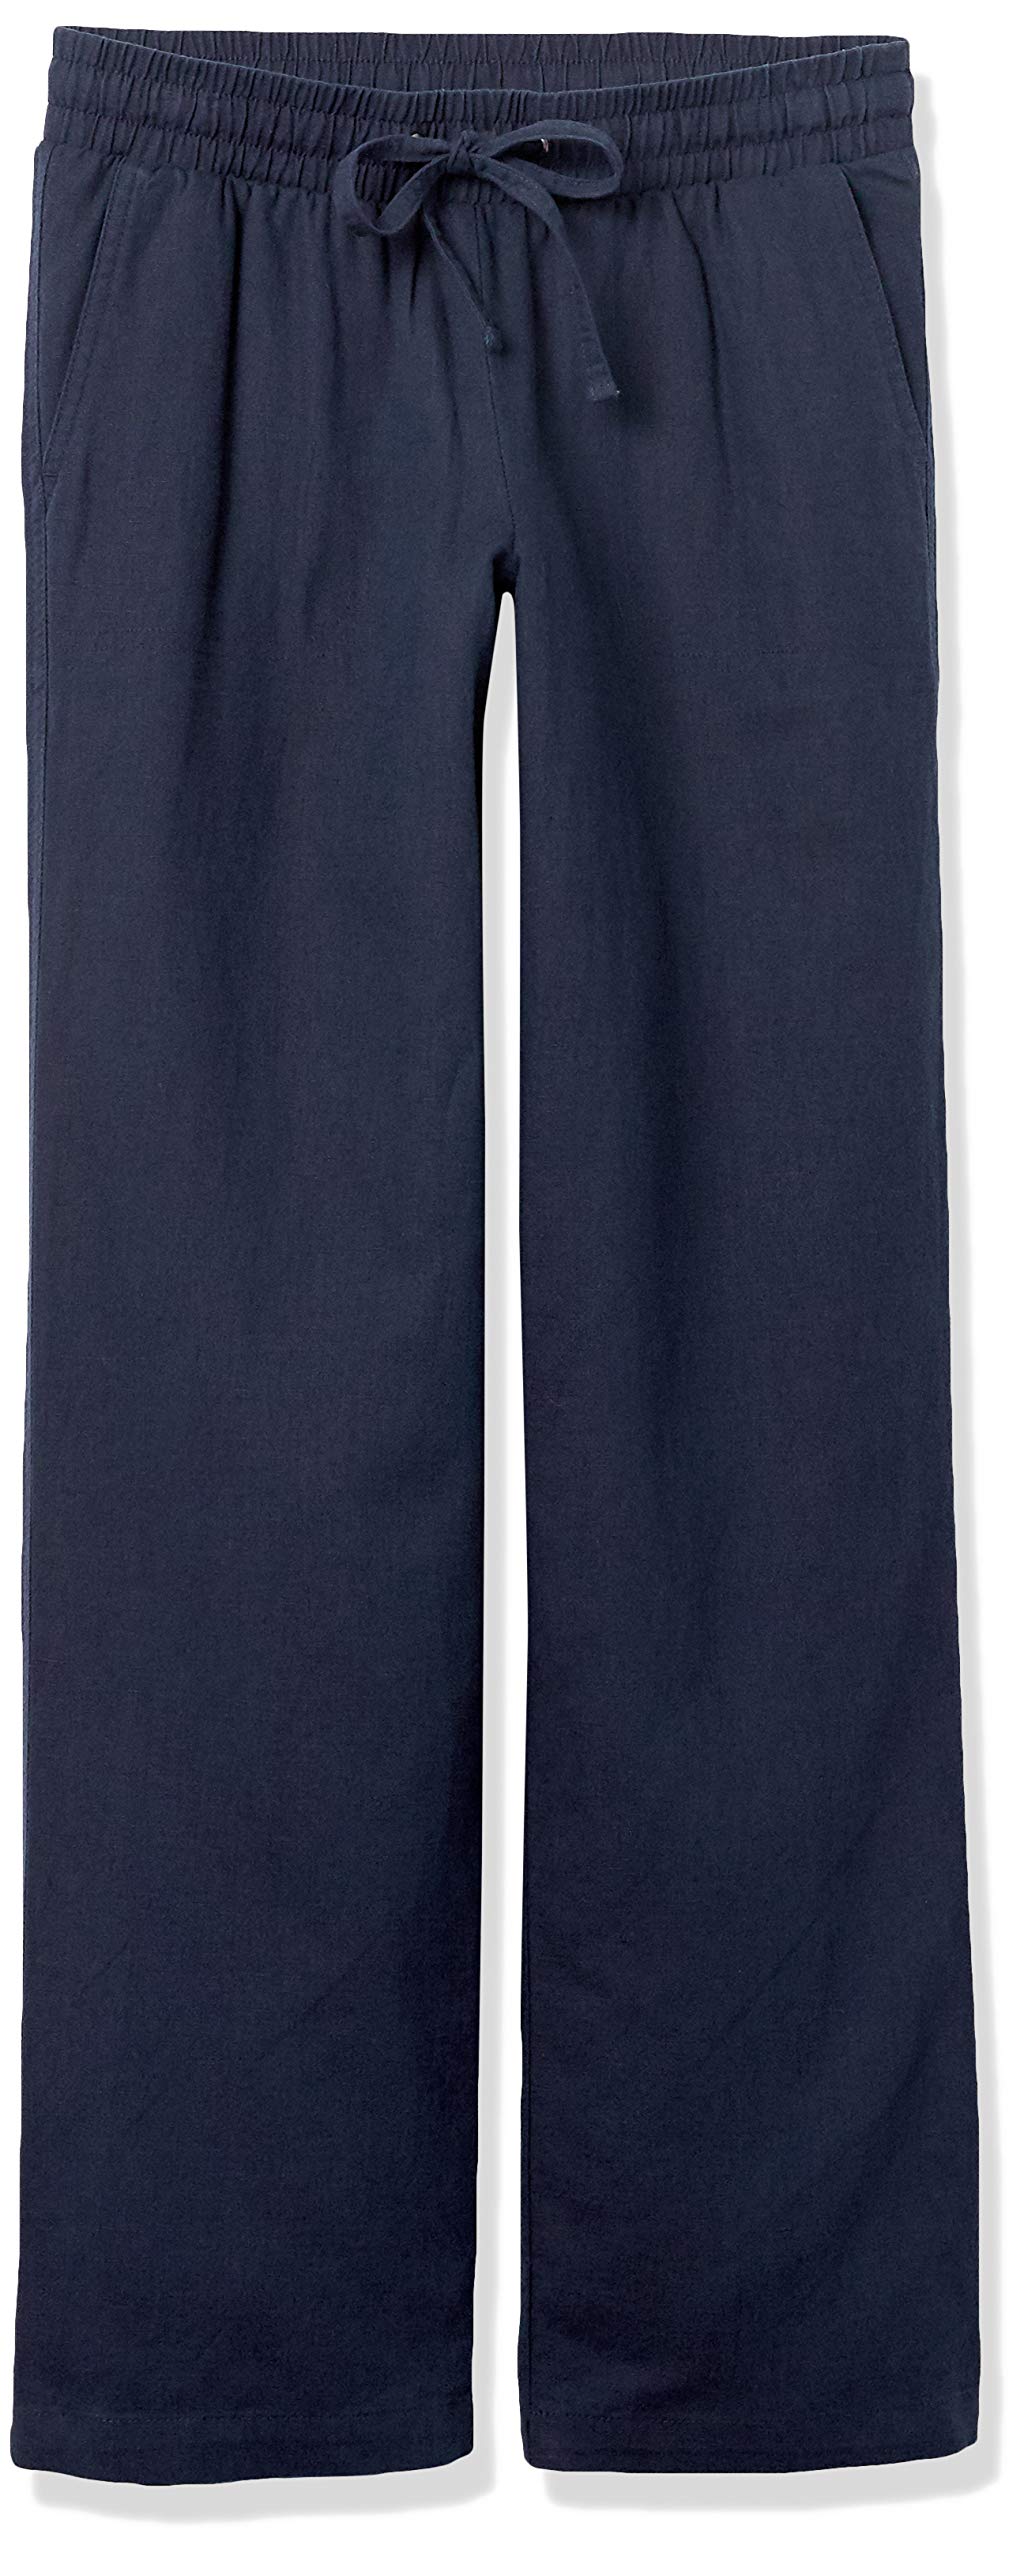 Amazon Essentials Women's Linen Blend Drawstring Wide Leg Pant (Available in Plus Size)